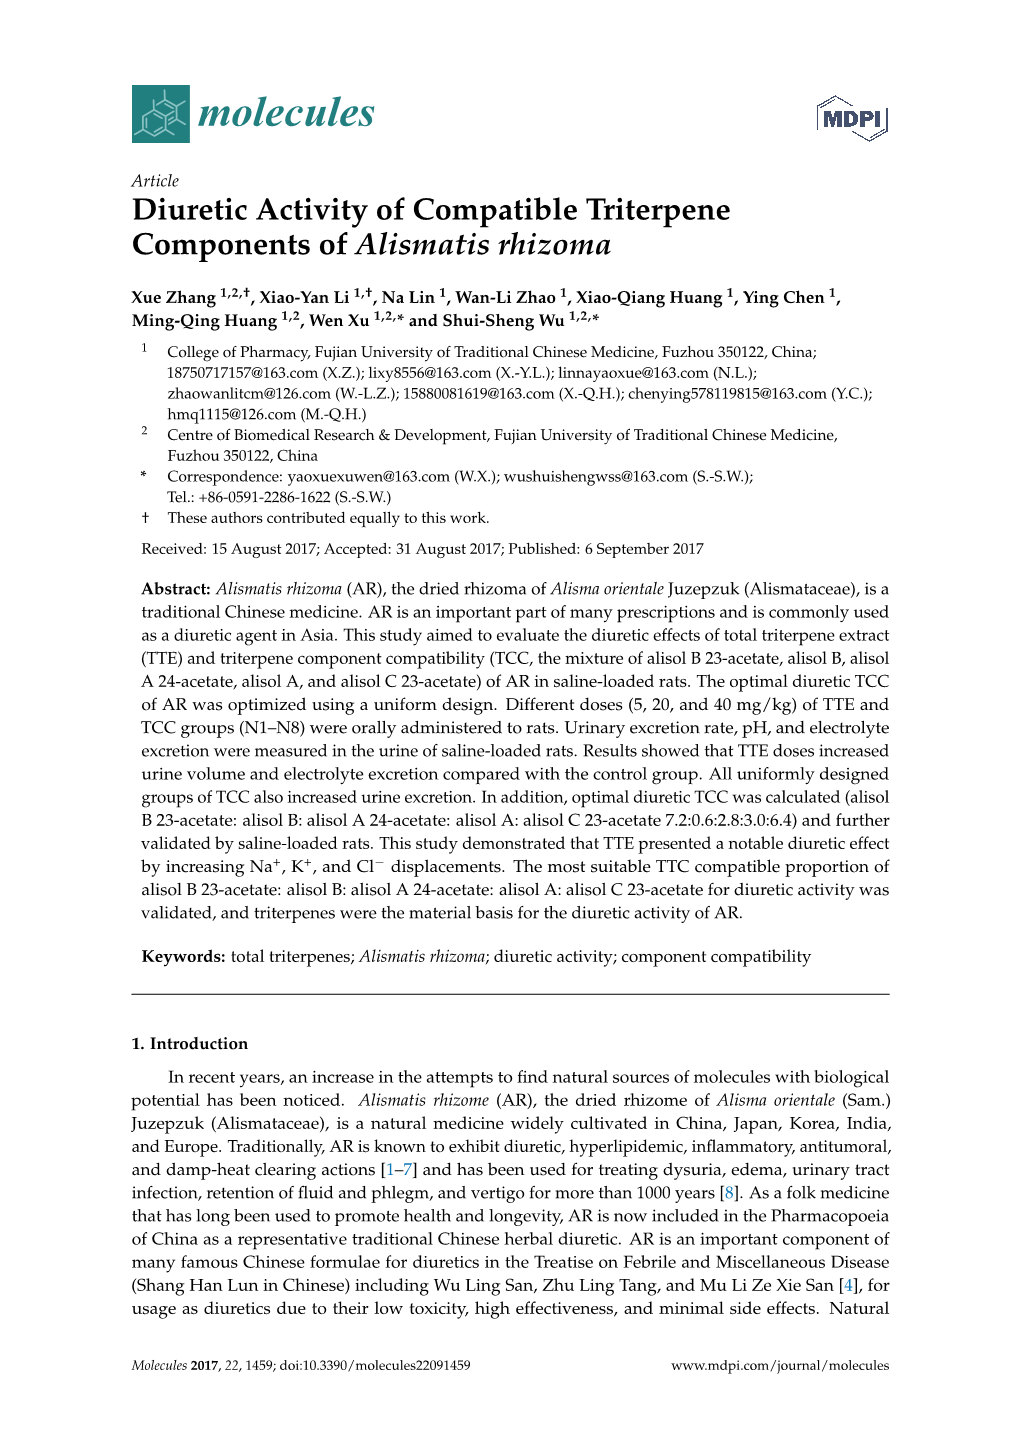 Diuretic Activity of Compatible Triterpene Components of Alismatis Rhizoma